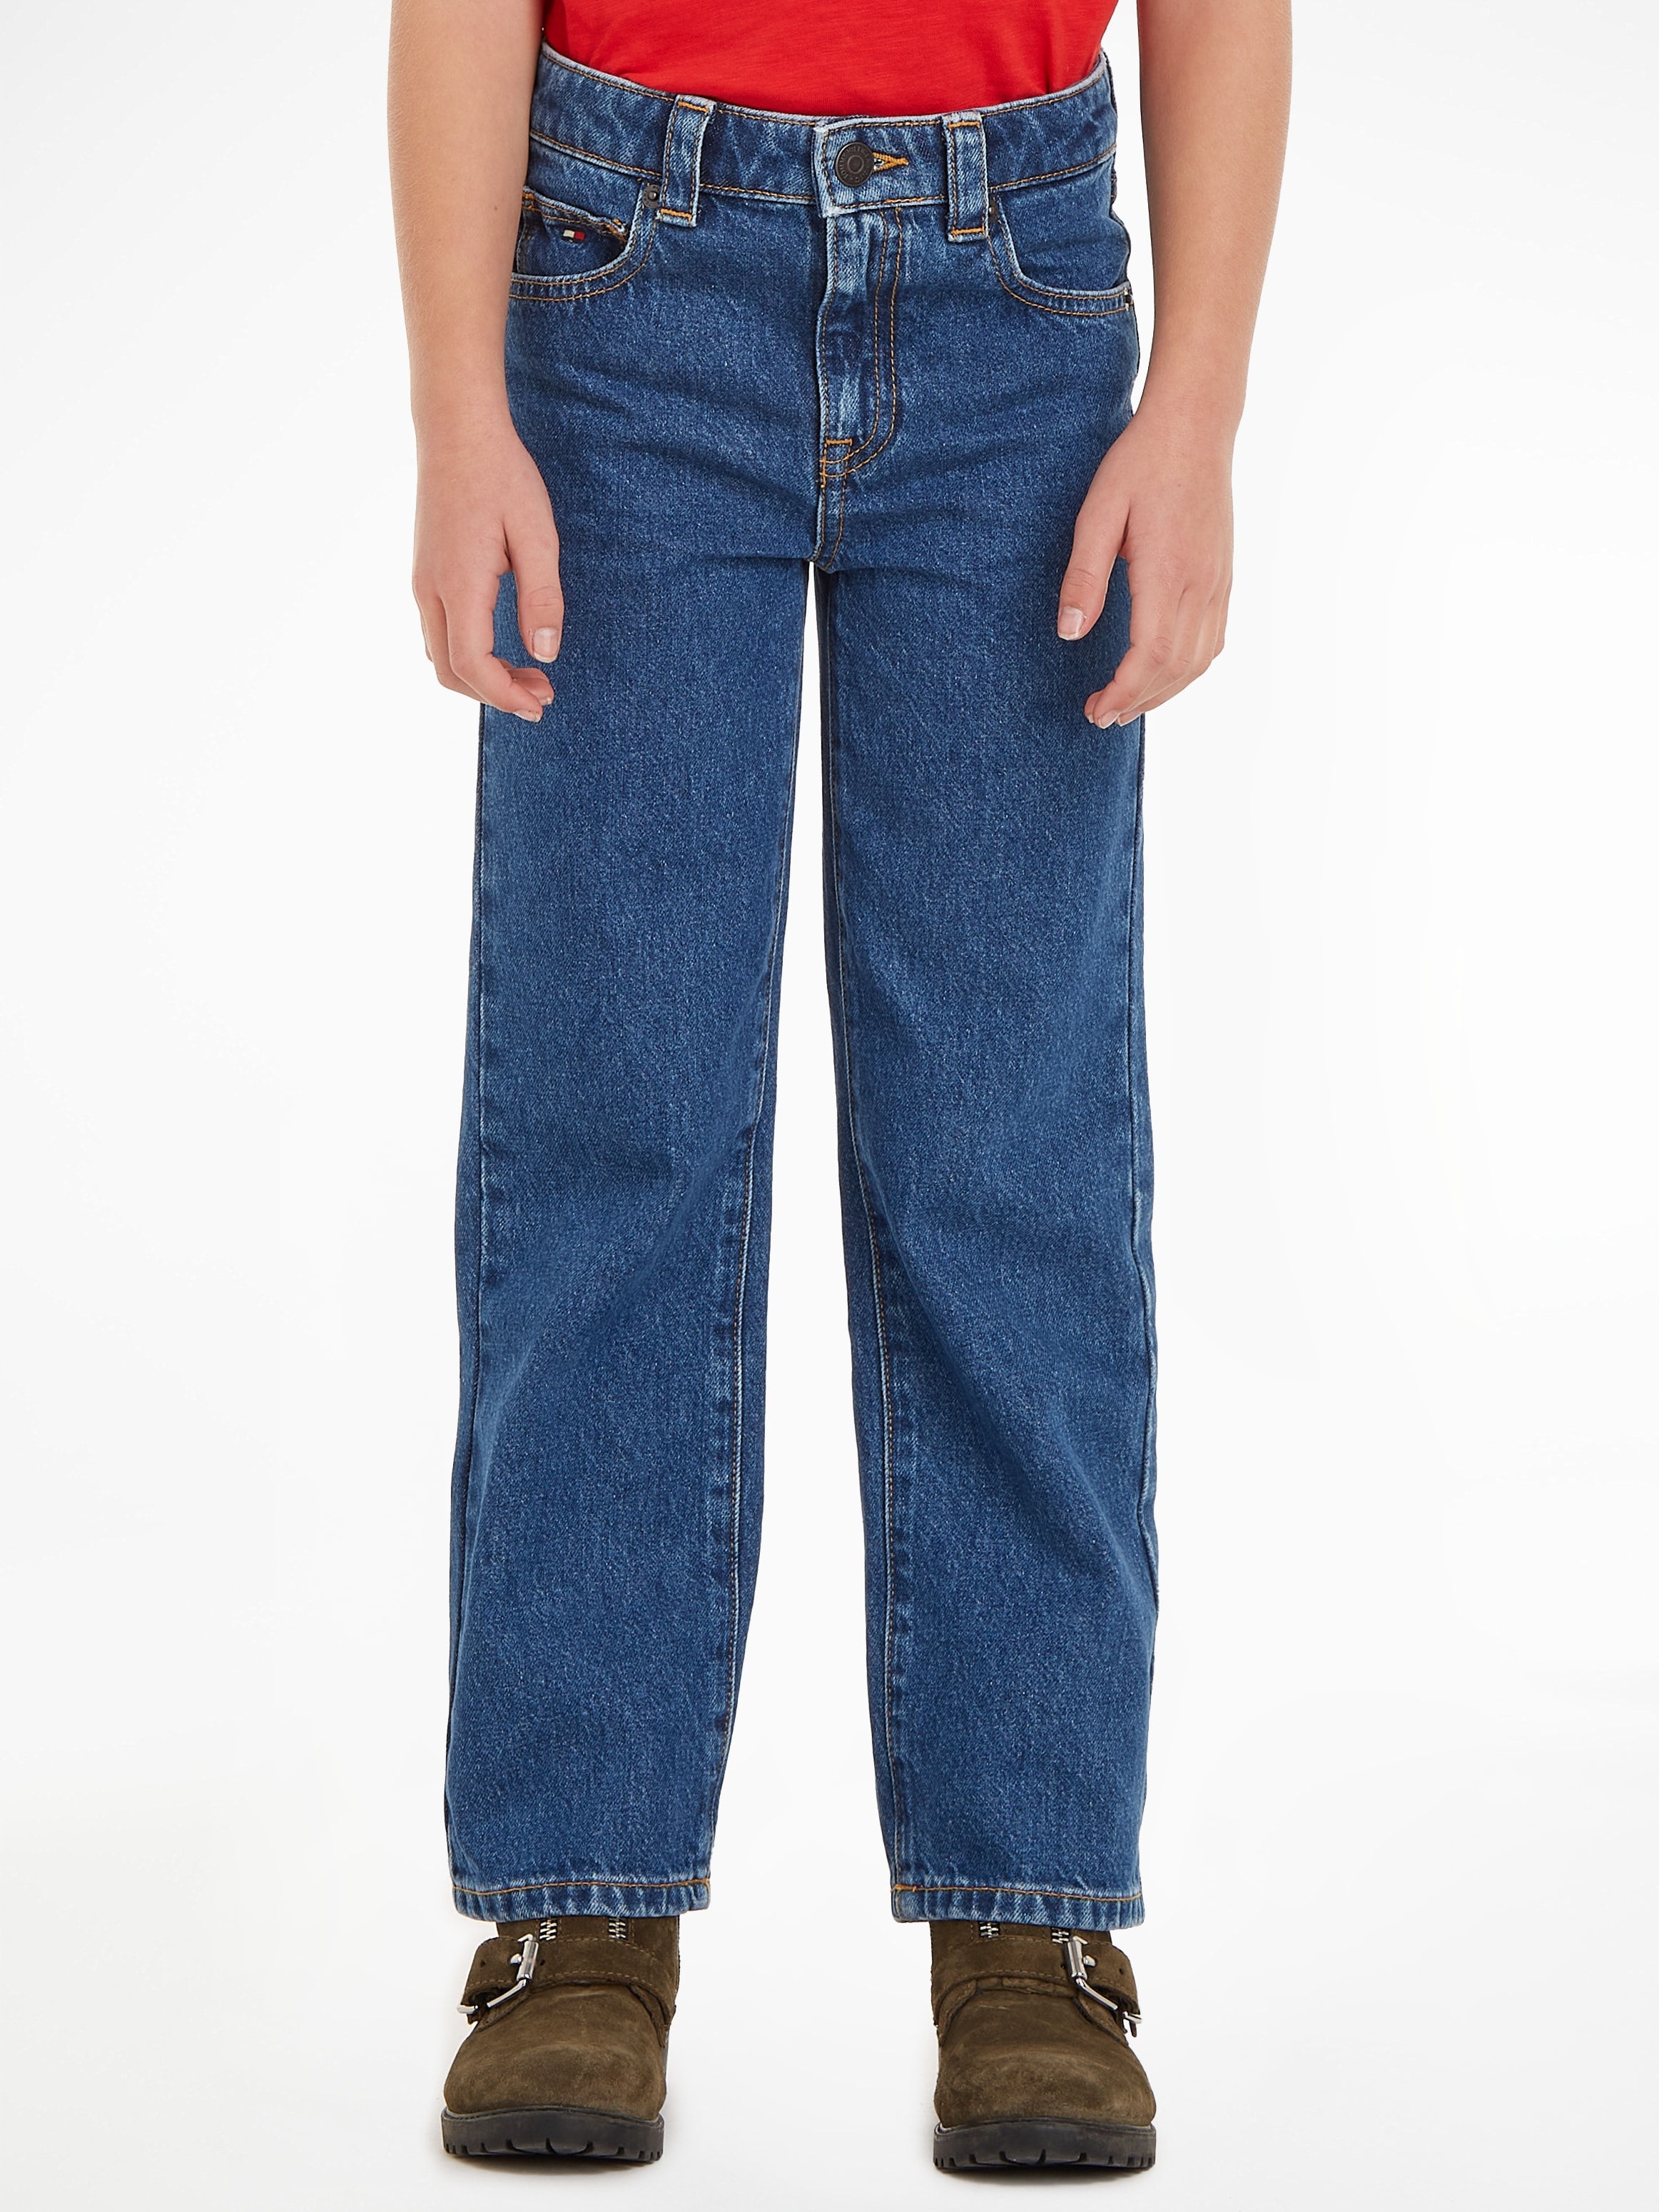 Tommy Hilfiger 5-Pocket-Jeans »GIRLFRIEND MID BLUE«, Kinder Kids Junior MiniMe,mit Leder-Brandlabel am hinteren Bund